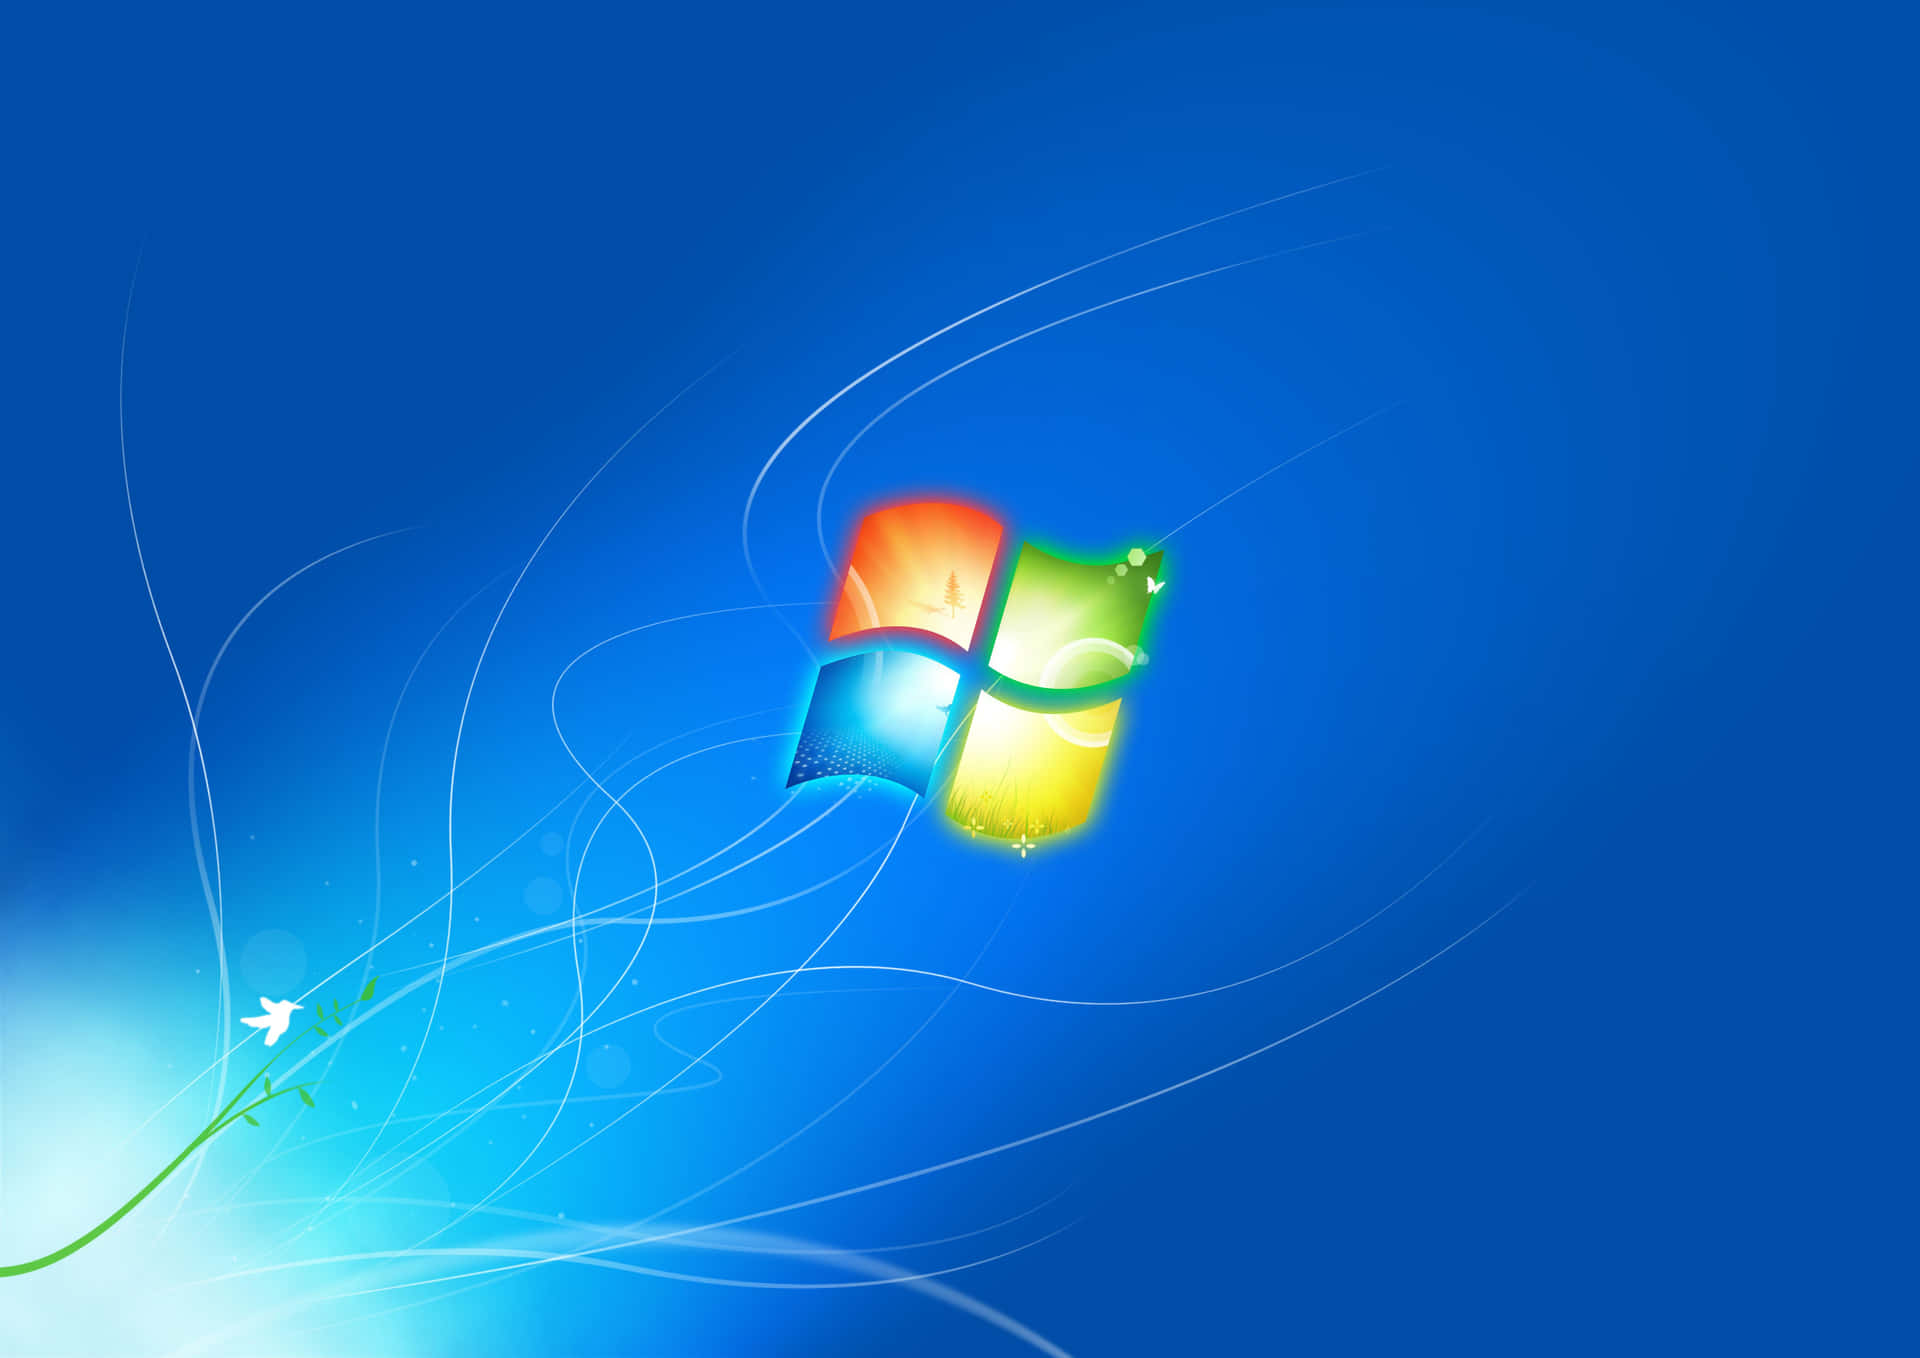 Default Microsoft Windows Desktop Background